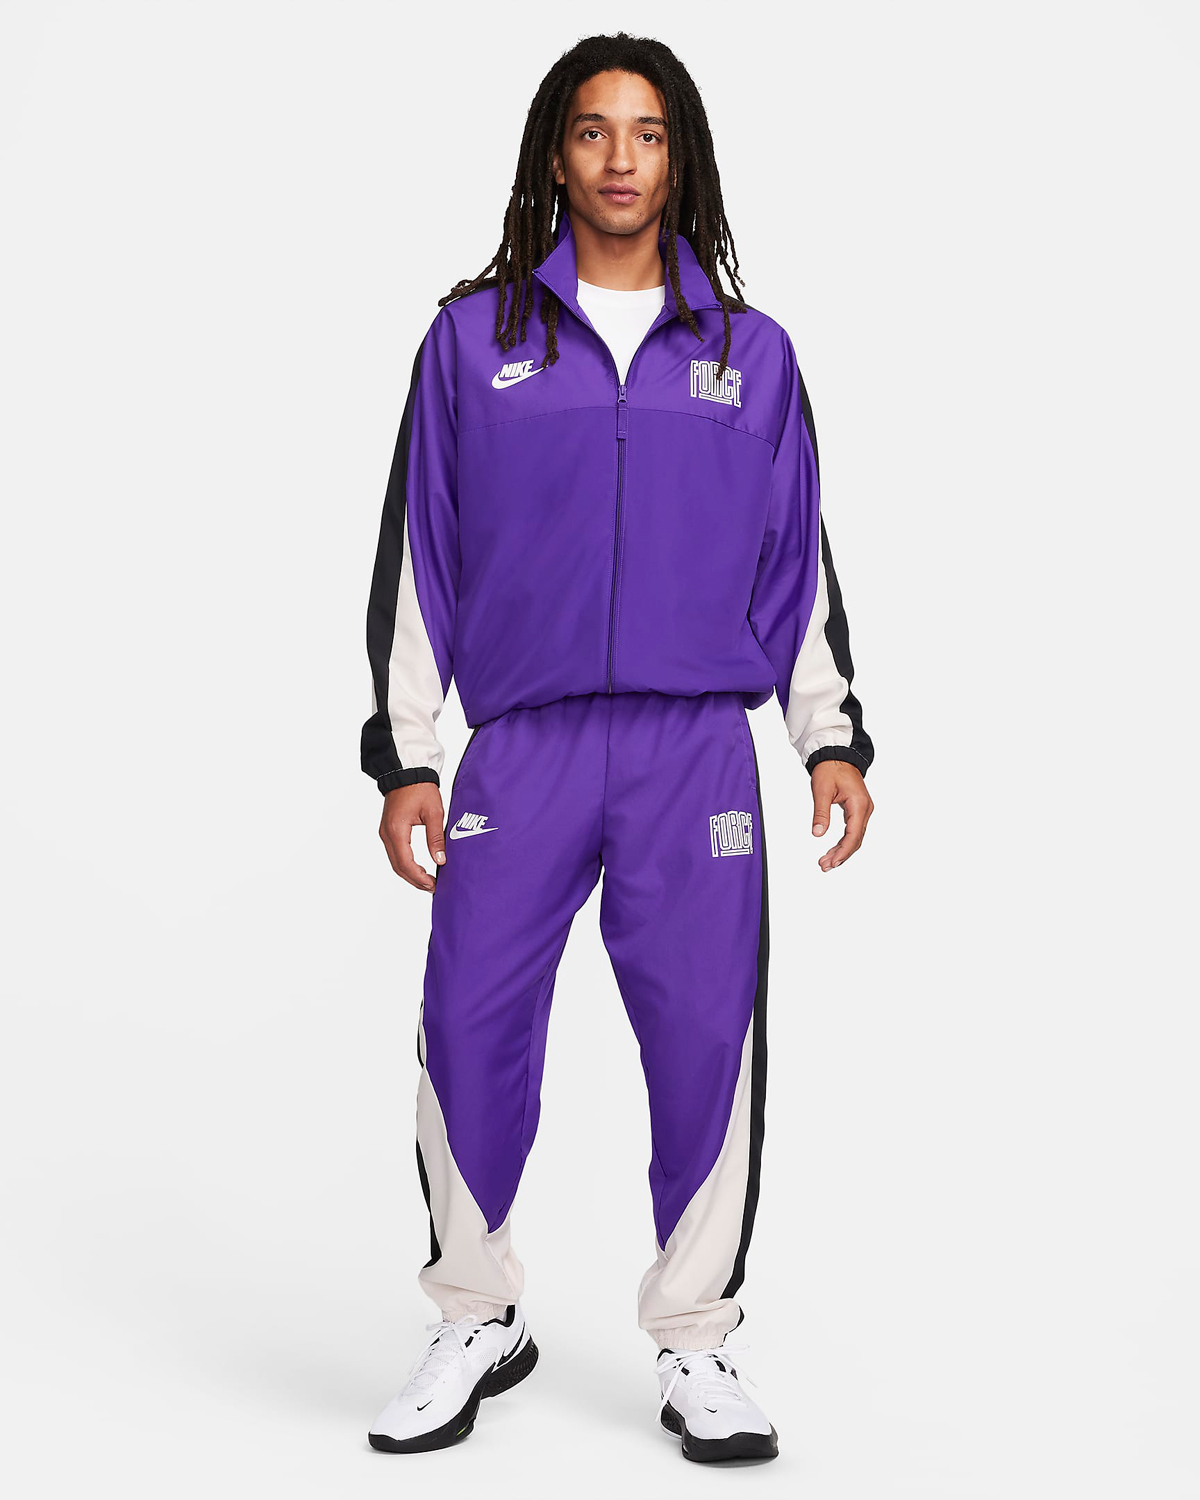 Nike Starting 5 Jacket Pants Field Purple Outfit